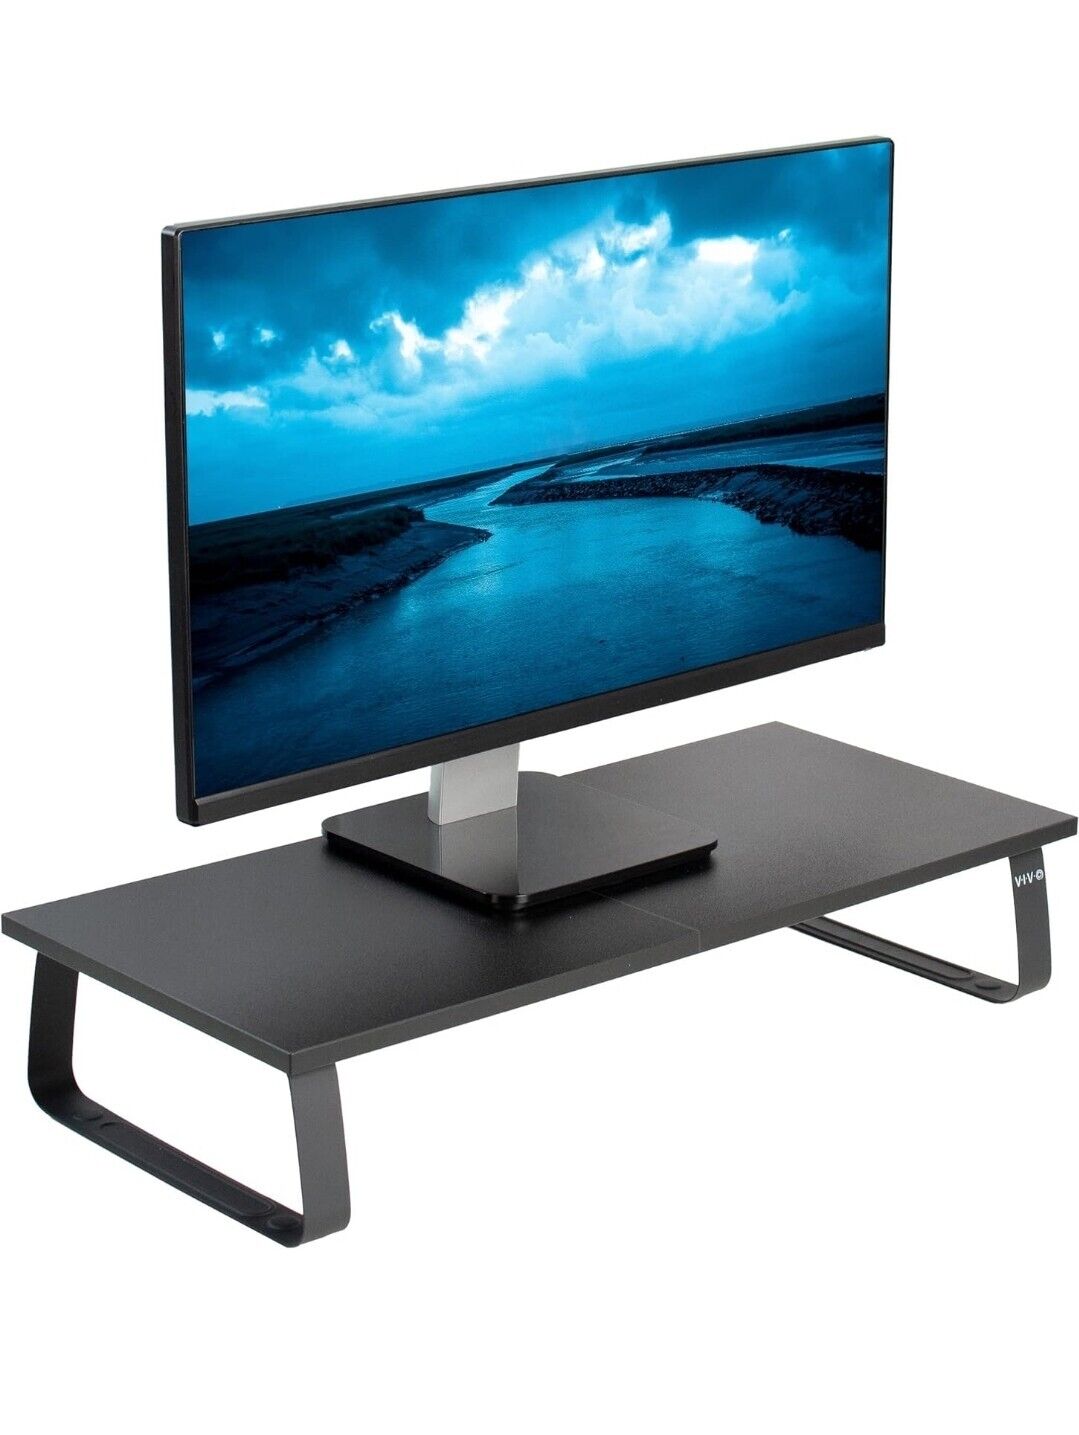 VIVO 24 inch Monitor Stand, Wood & Steel Desktop Riser, Screen, Keyboard, 